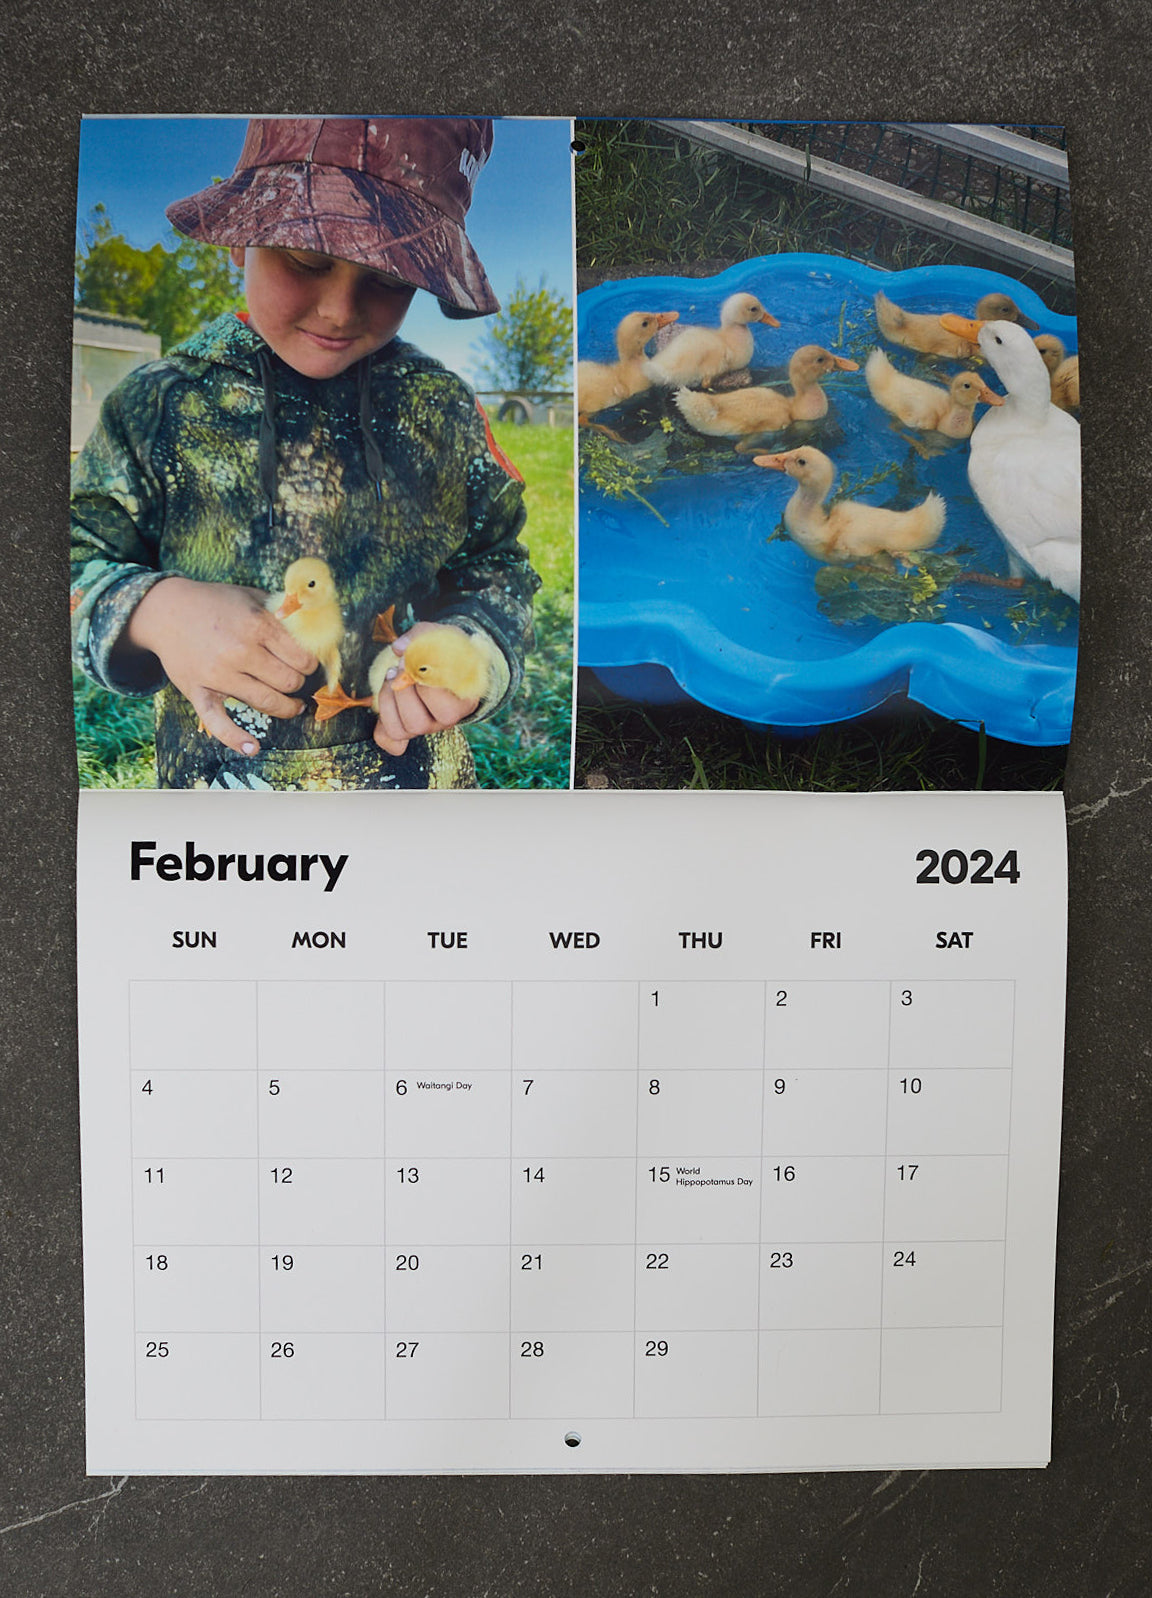 Kiwi Country Kids 2024 Calendar